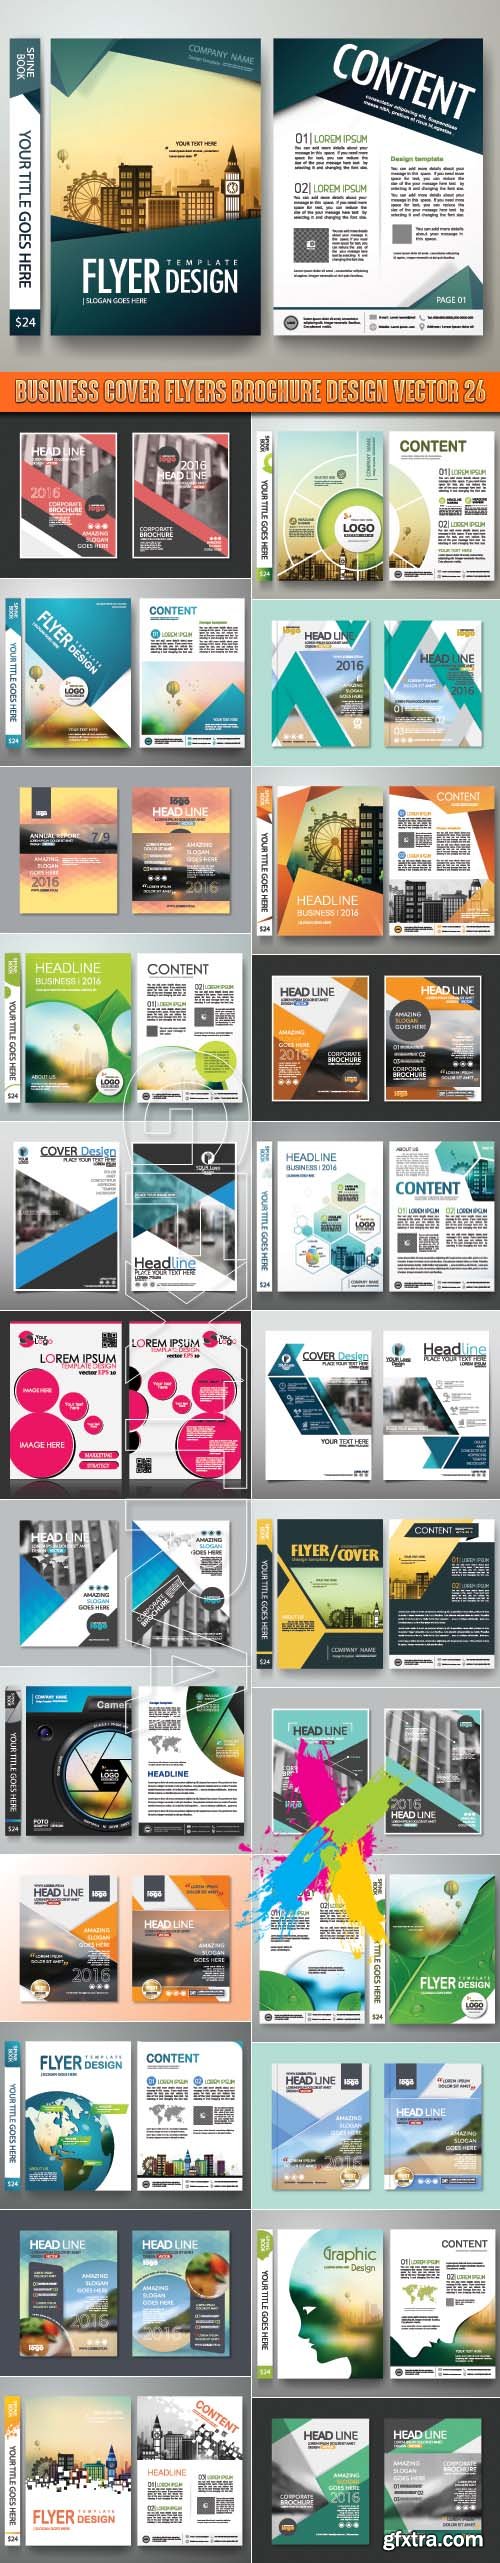 Business cover flyers brochure design vector 26